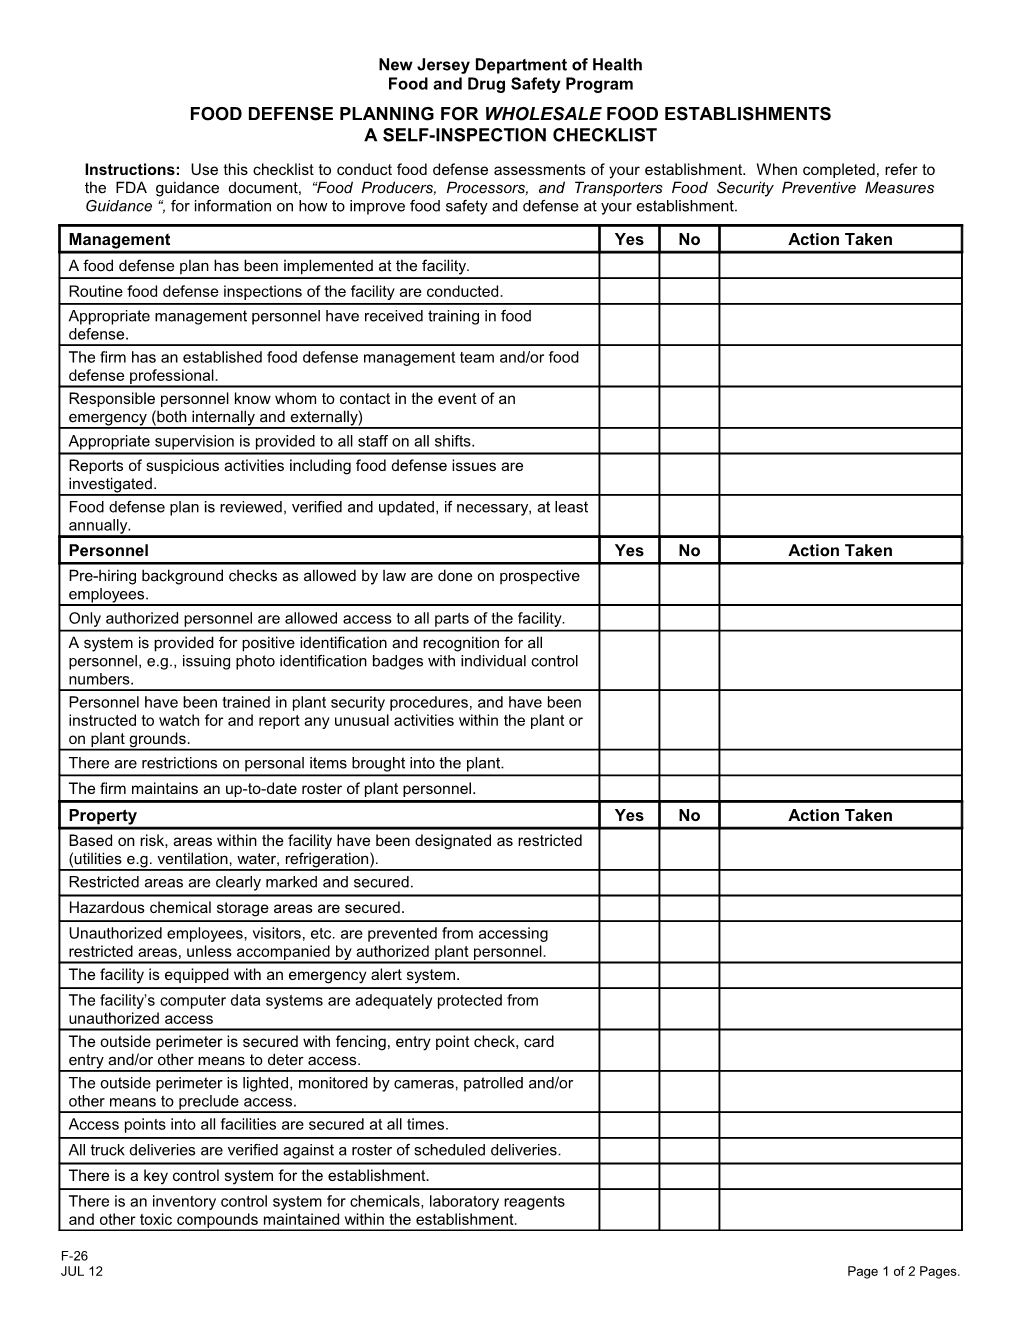 F-26, Self-Inspection Checklist (Wholesale)